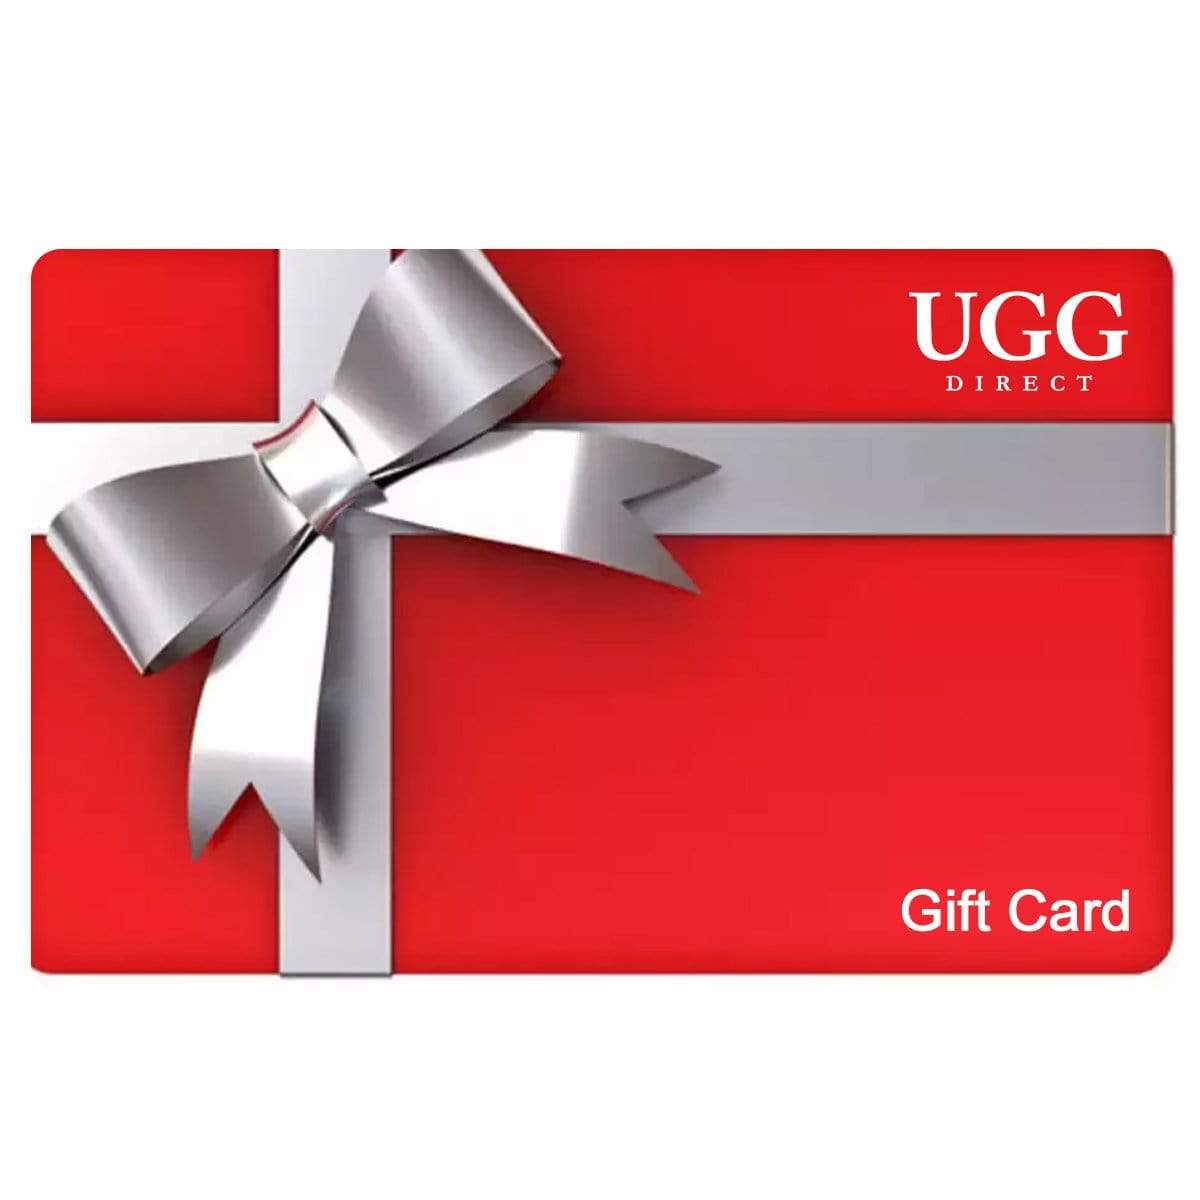 ugg direct e gift card 50 00 28807222427719 43995fa3 73c9 4774 8f2f f67a1ccad470